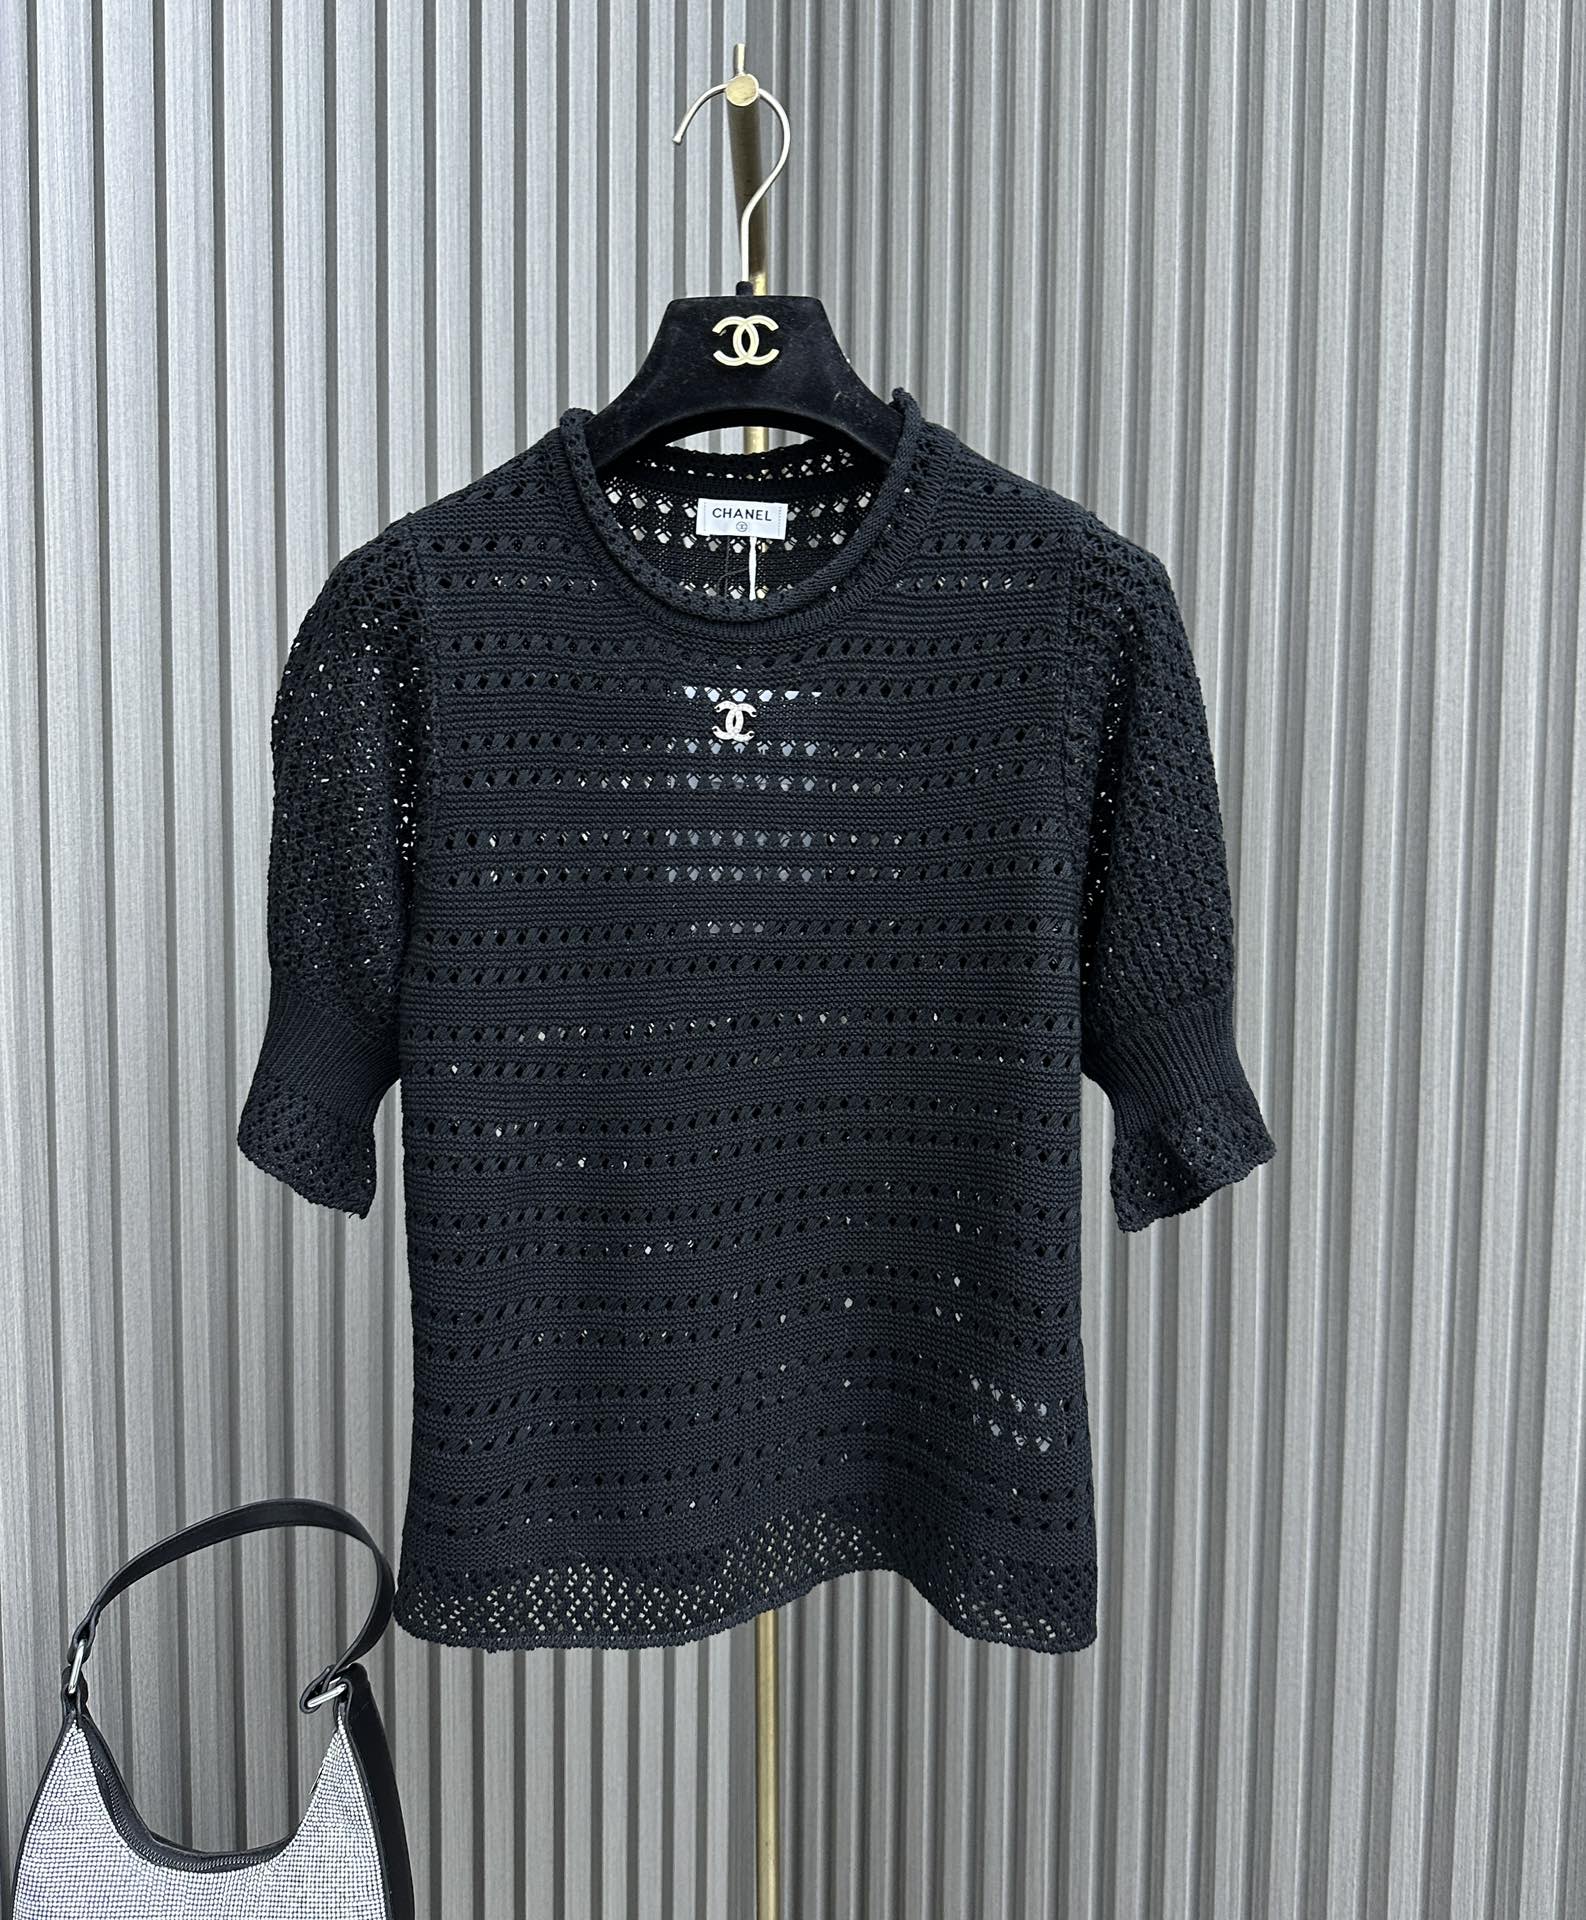 Chanel Clothing Shirts & Blouses Same as Original
 Openwork Cotton Knitting